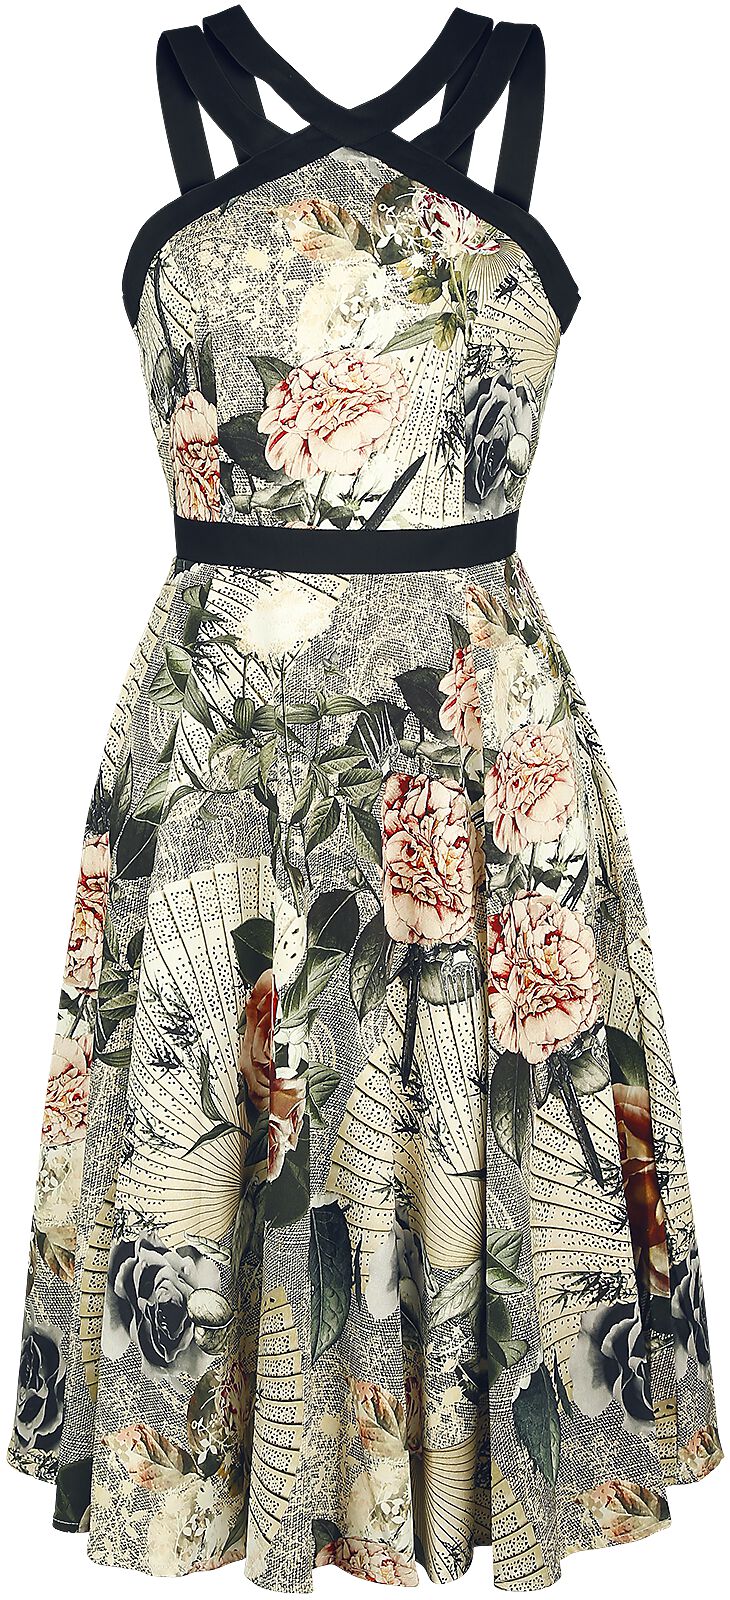 H&R London - Rockabilly Kleid knielang - Ancient Roses - S bis 4XL - für Damen - Größe S - multicolor